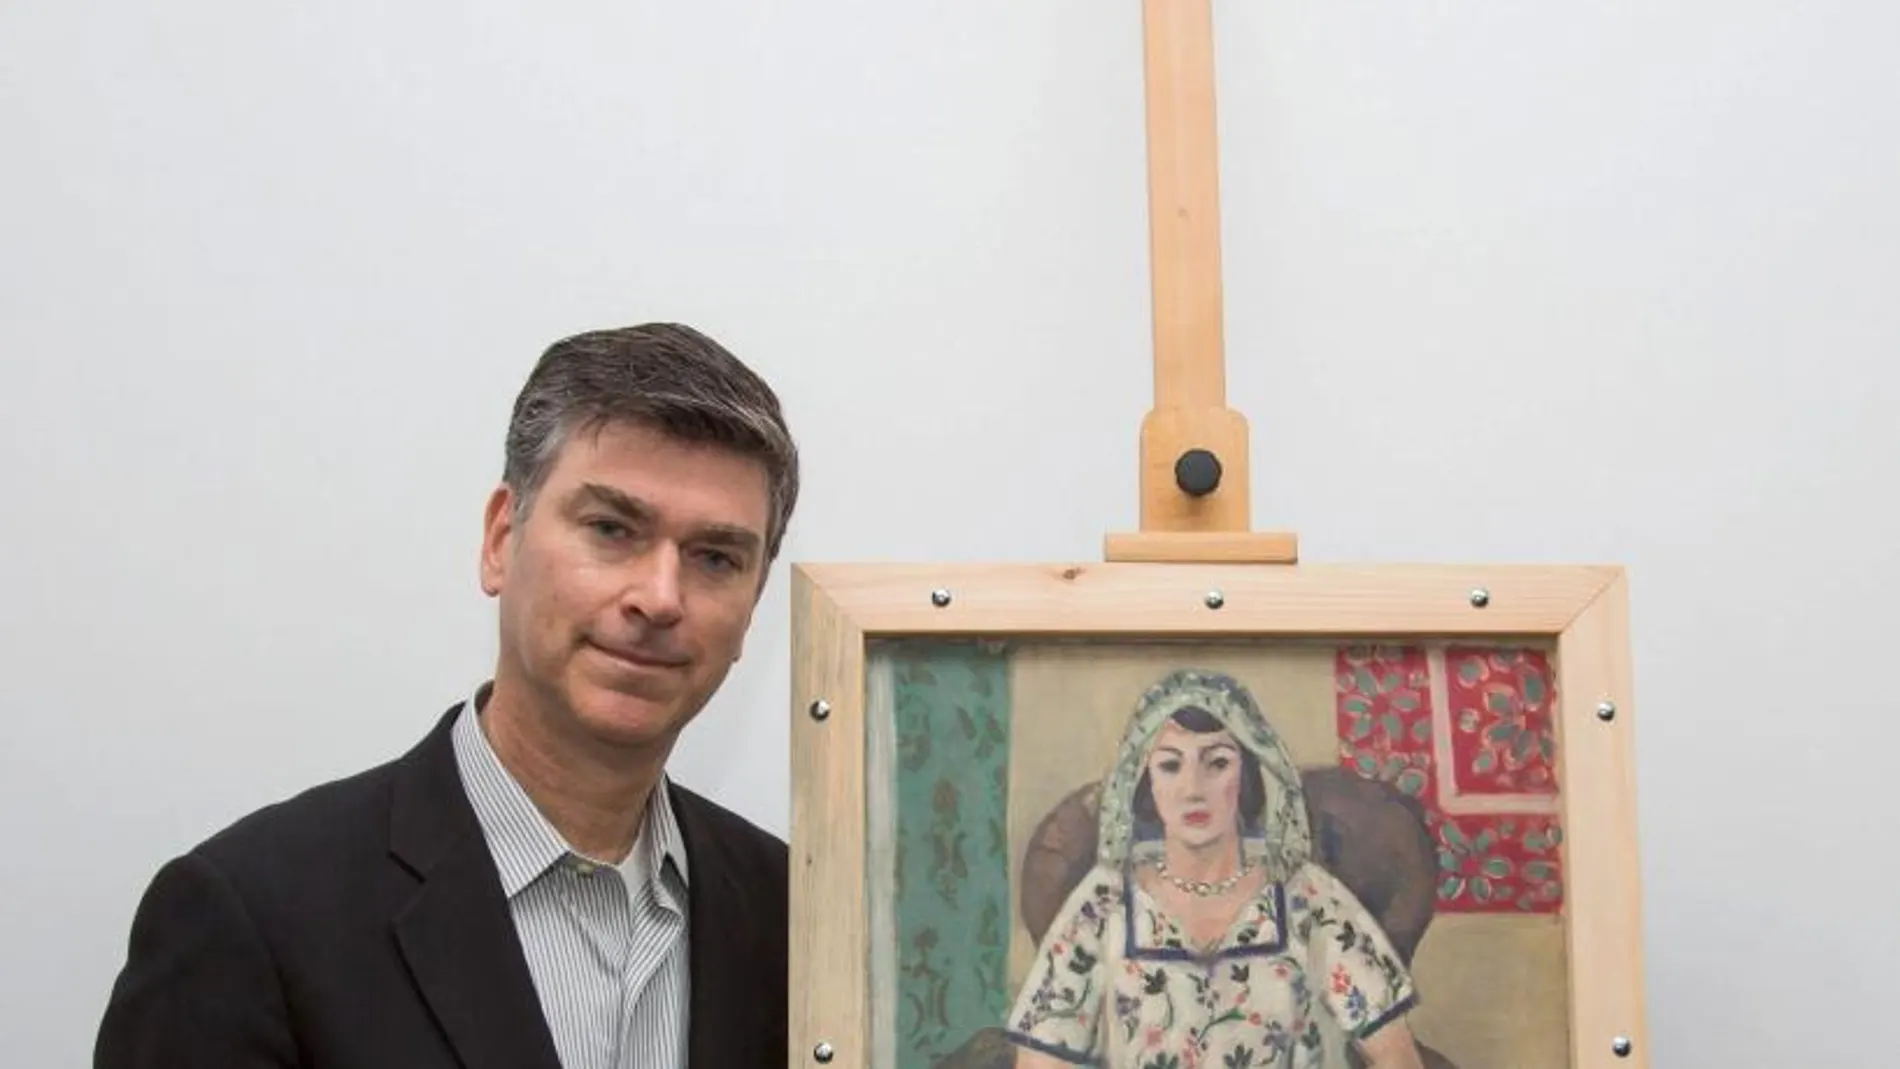 El experto Christopher Marinello junto a la obra "Mujer Sentada"del artista francés Henri Matisse cerca de Múnich (Alemania).